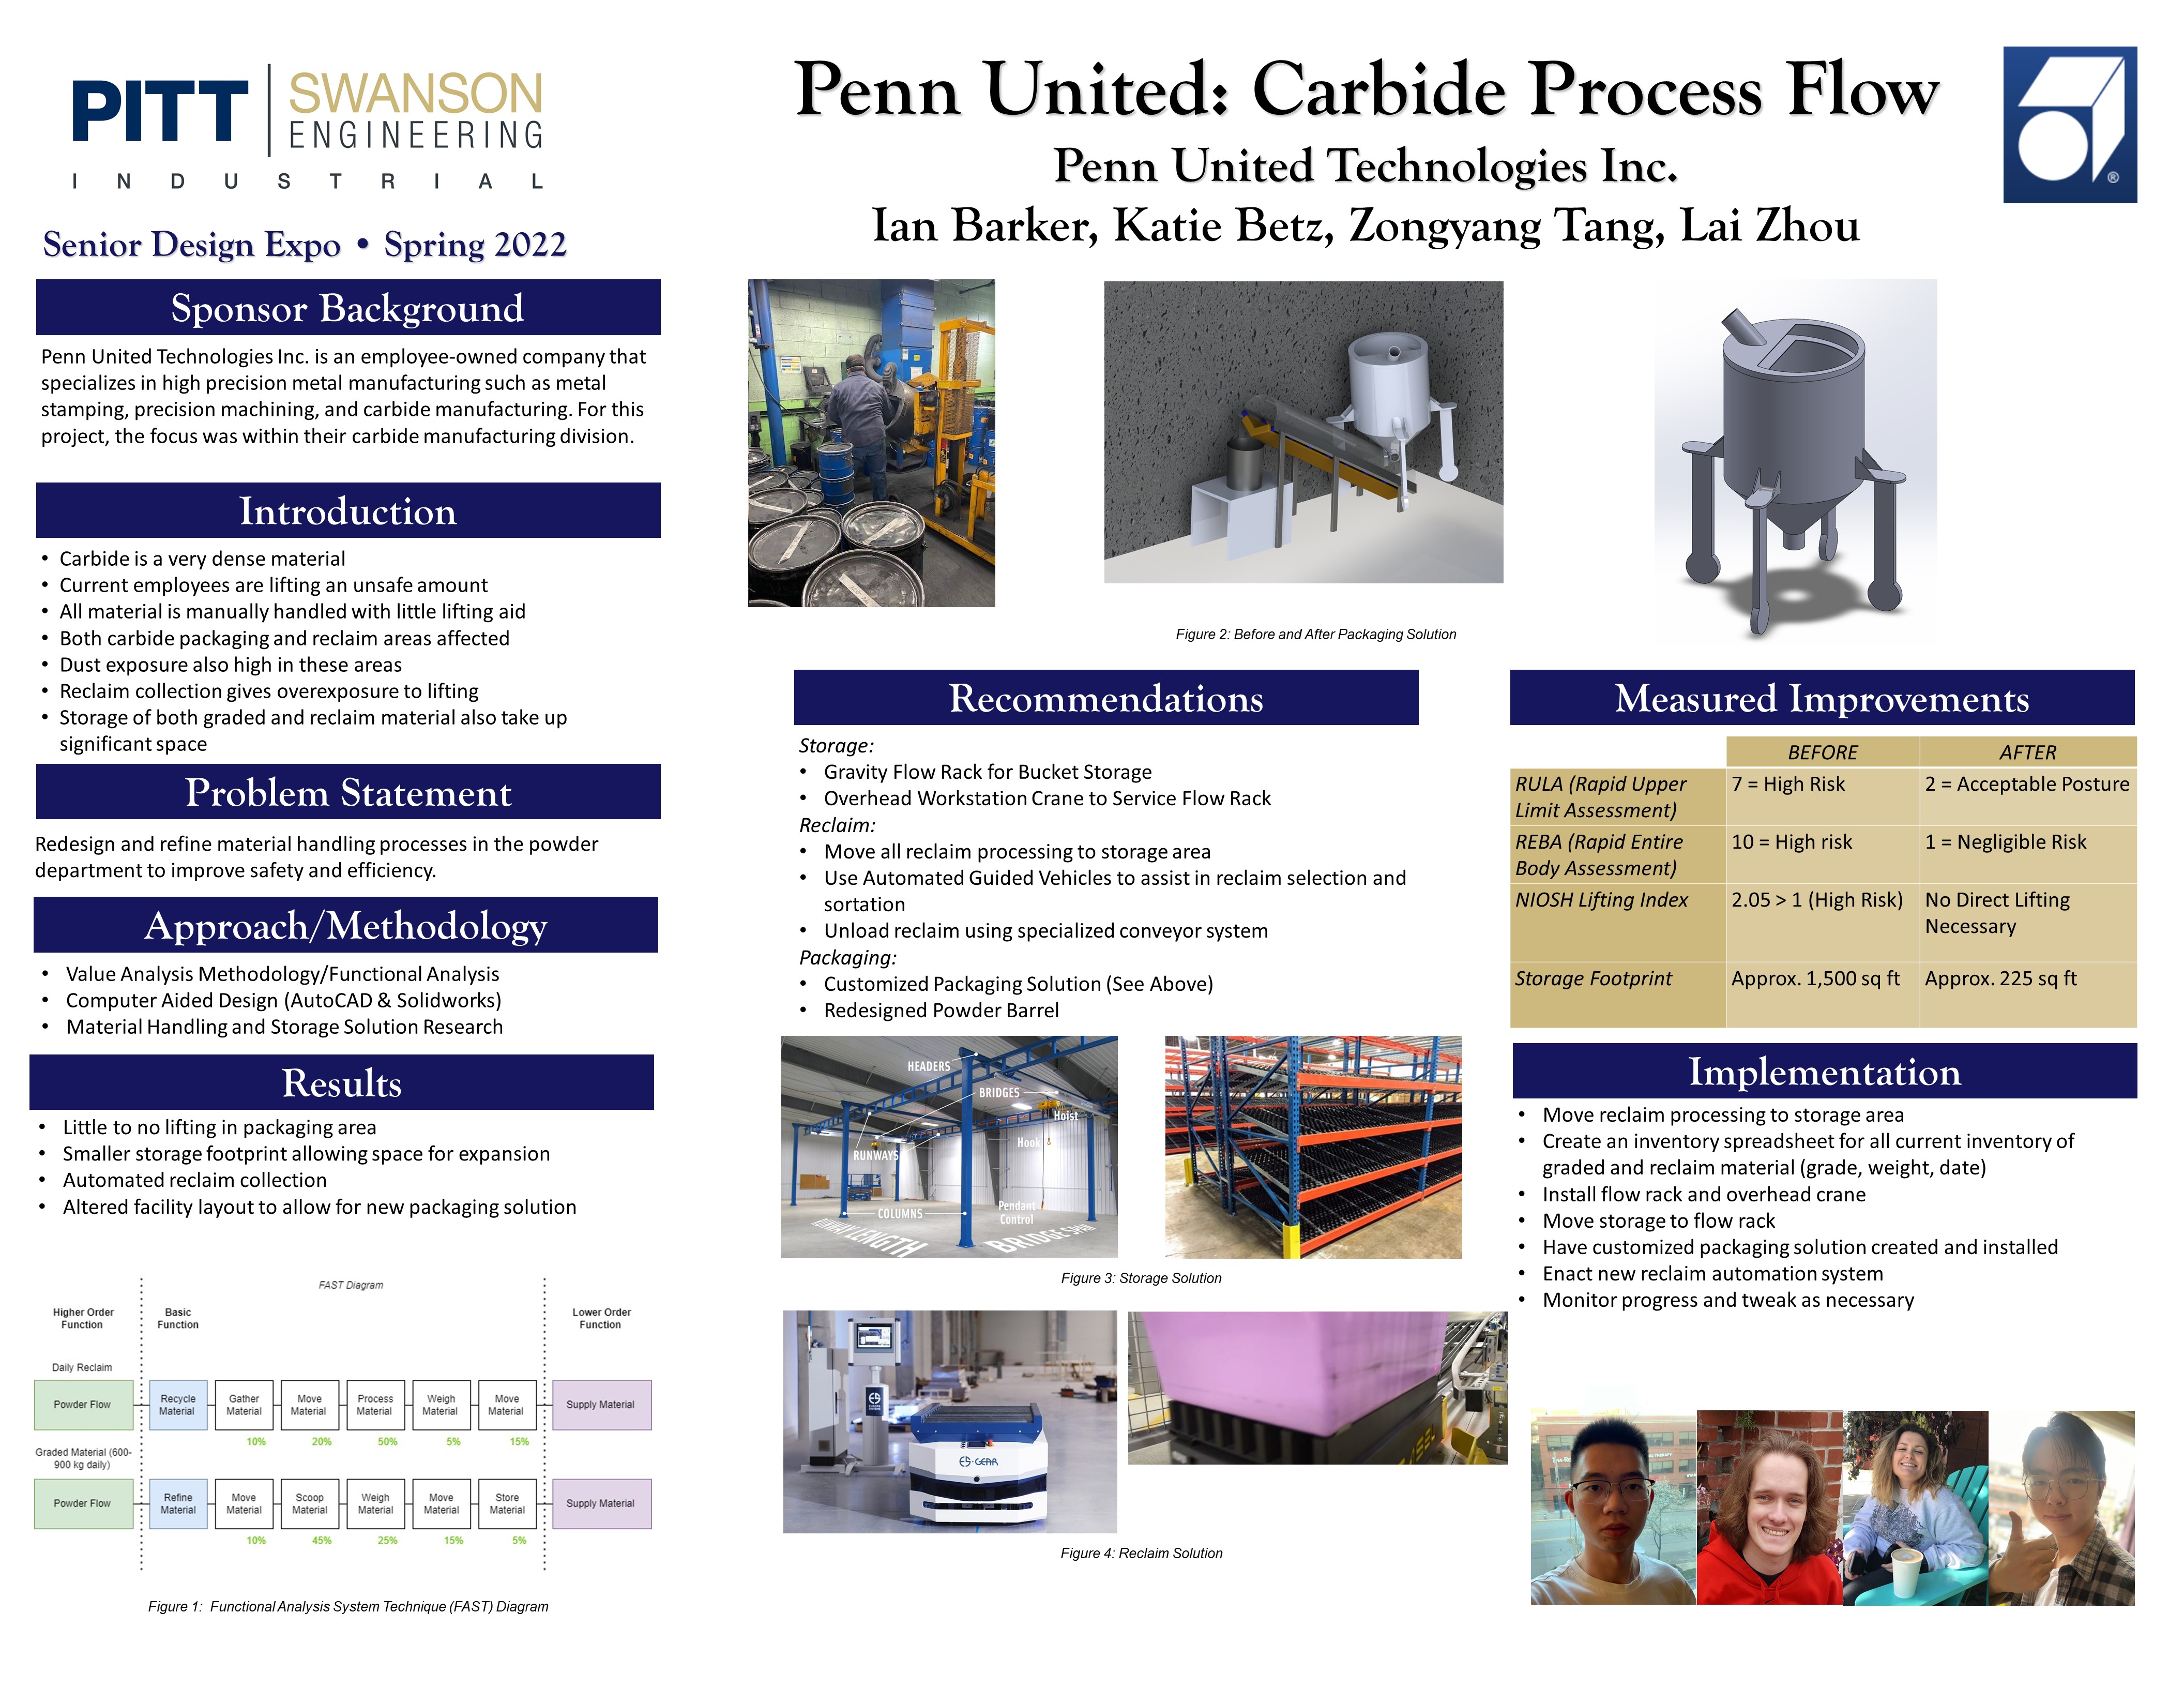 Senior Design Project - Penn United